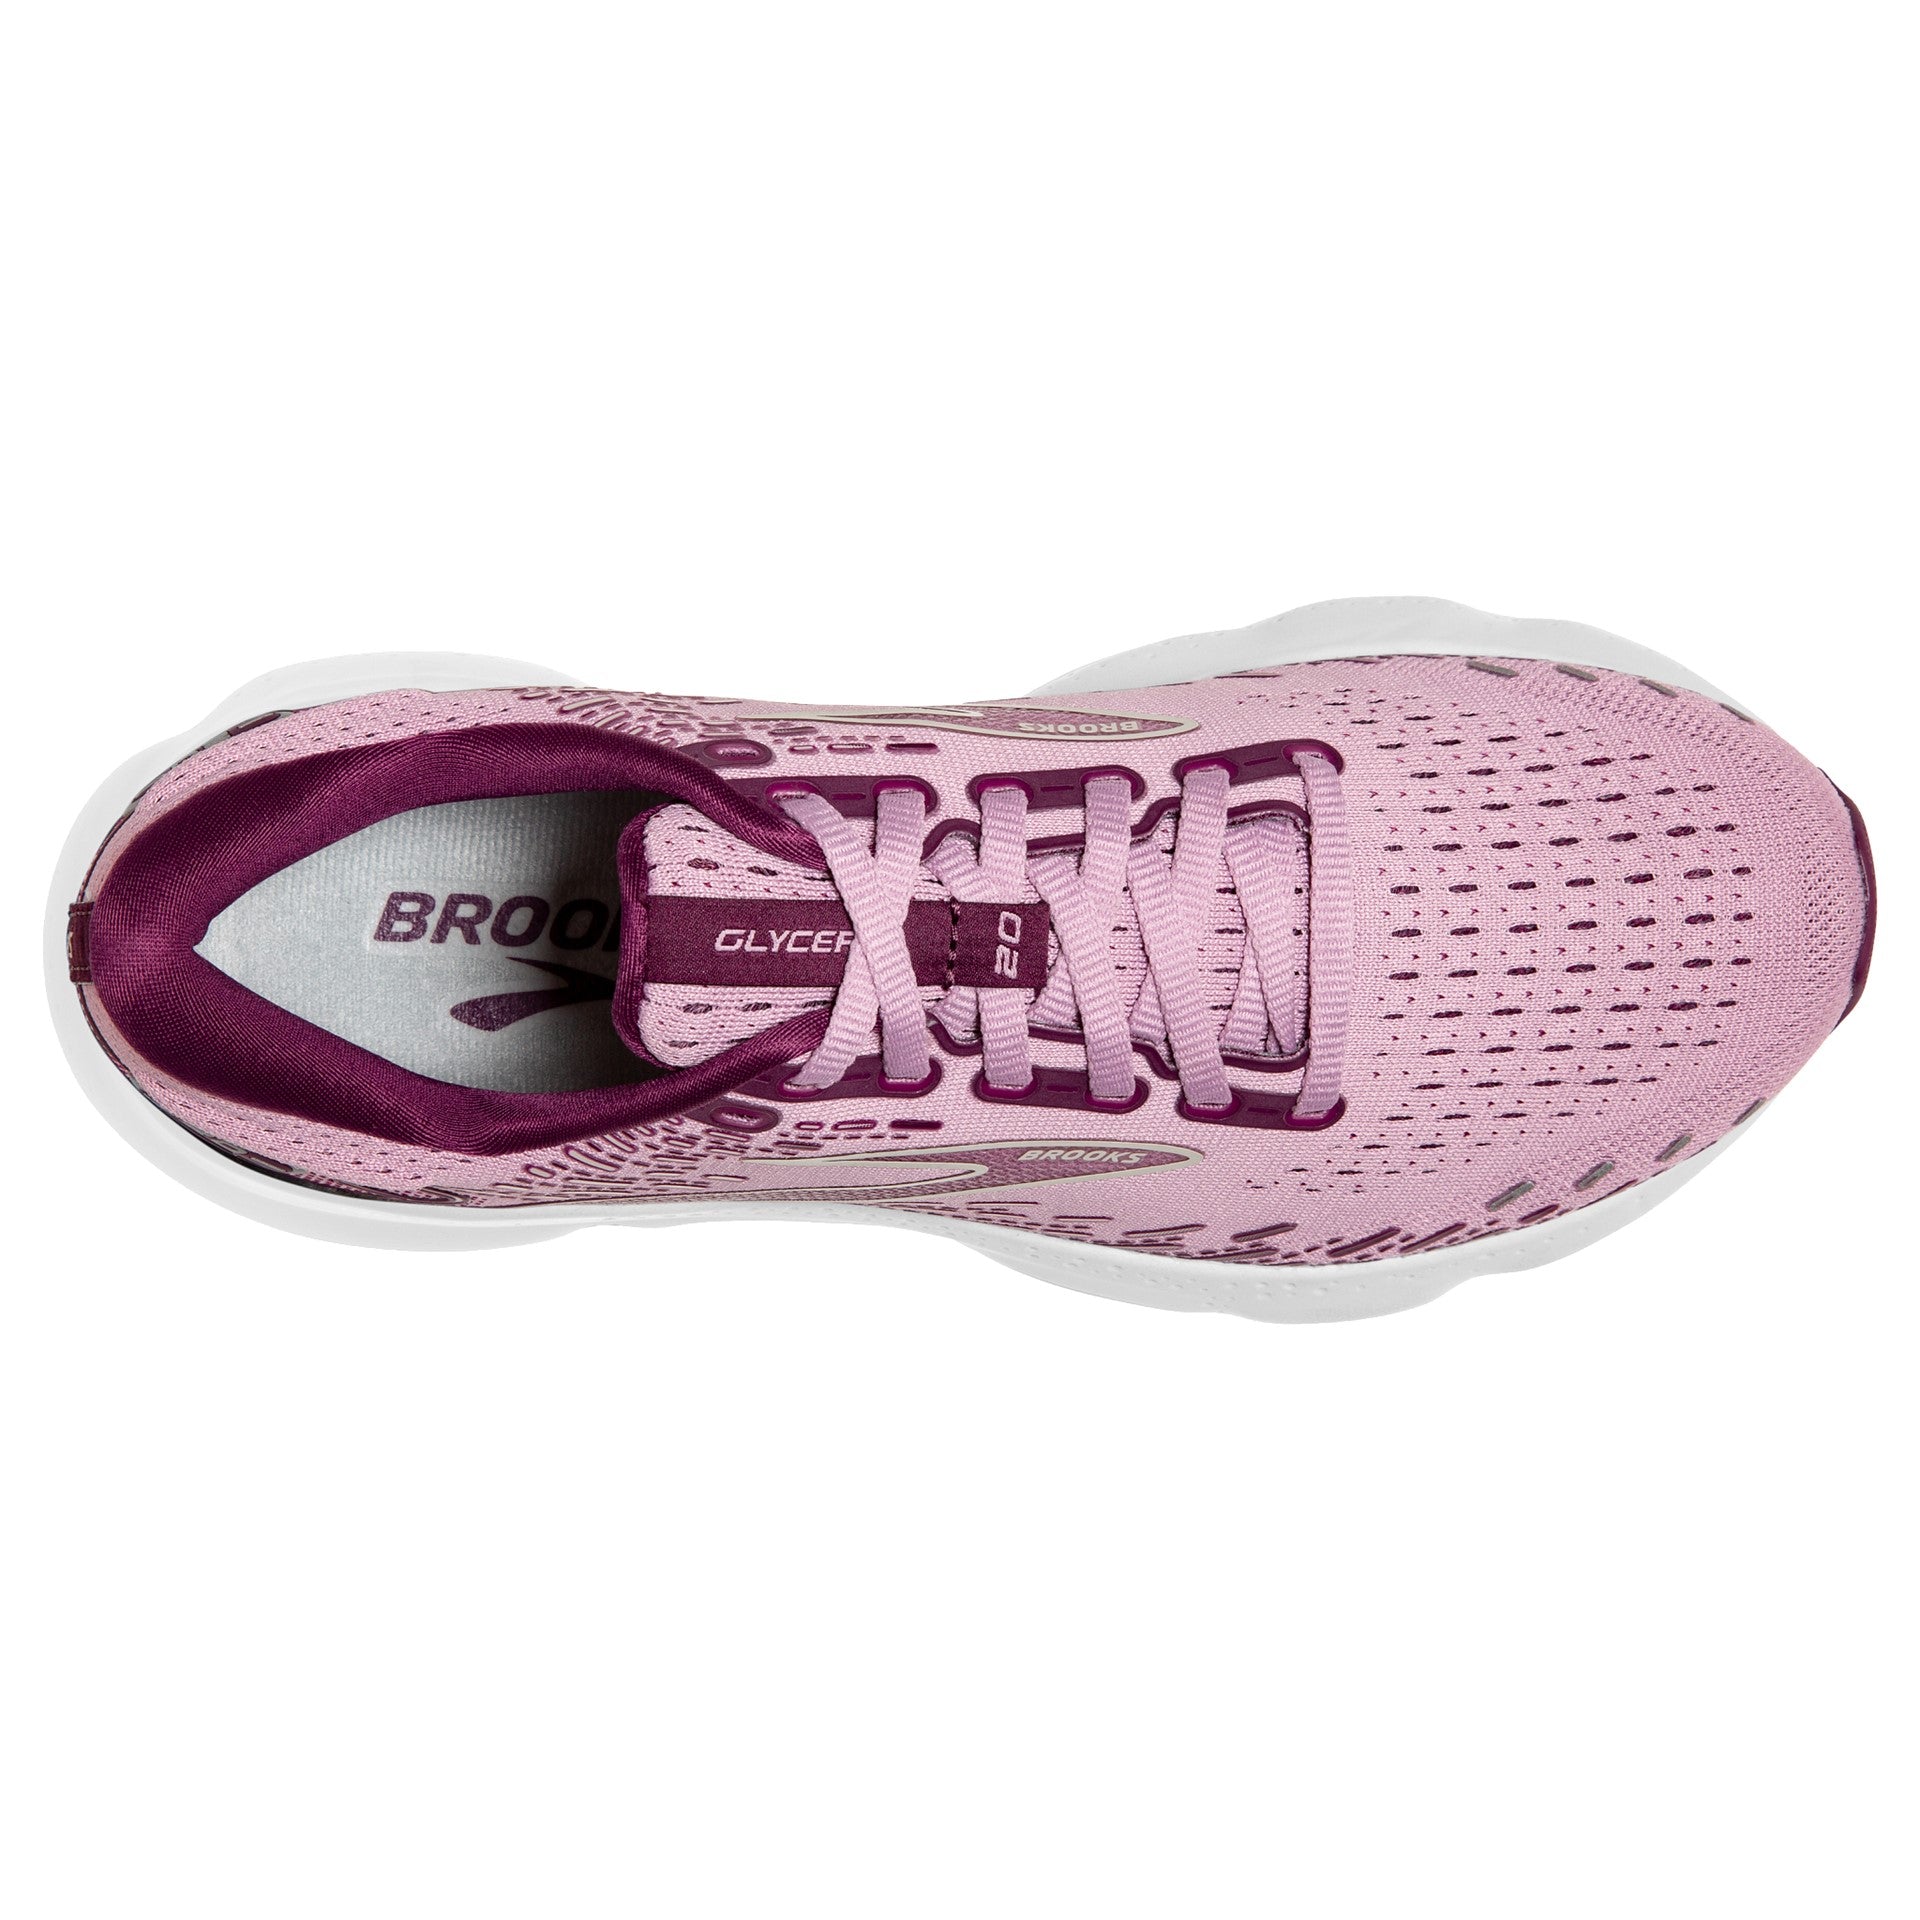 Glycerin 20: Women's Road Running Shoes | Brooks Running